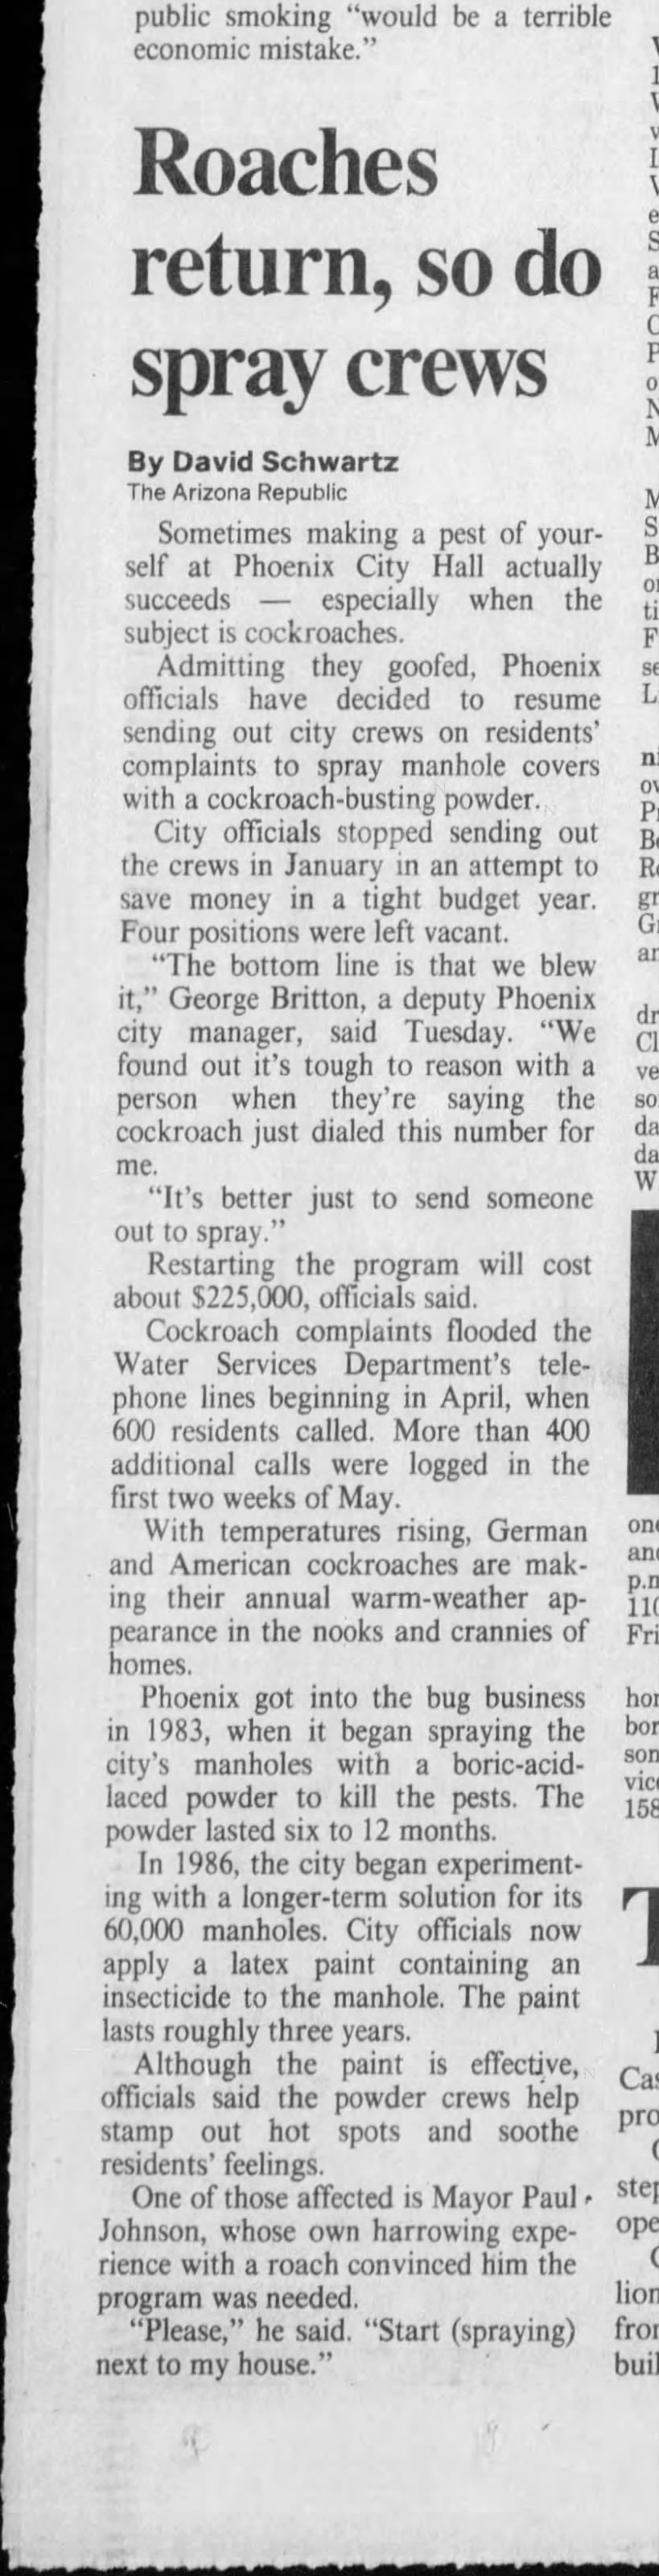 "Roaches return, so do spray crews" (May 21, 1992)